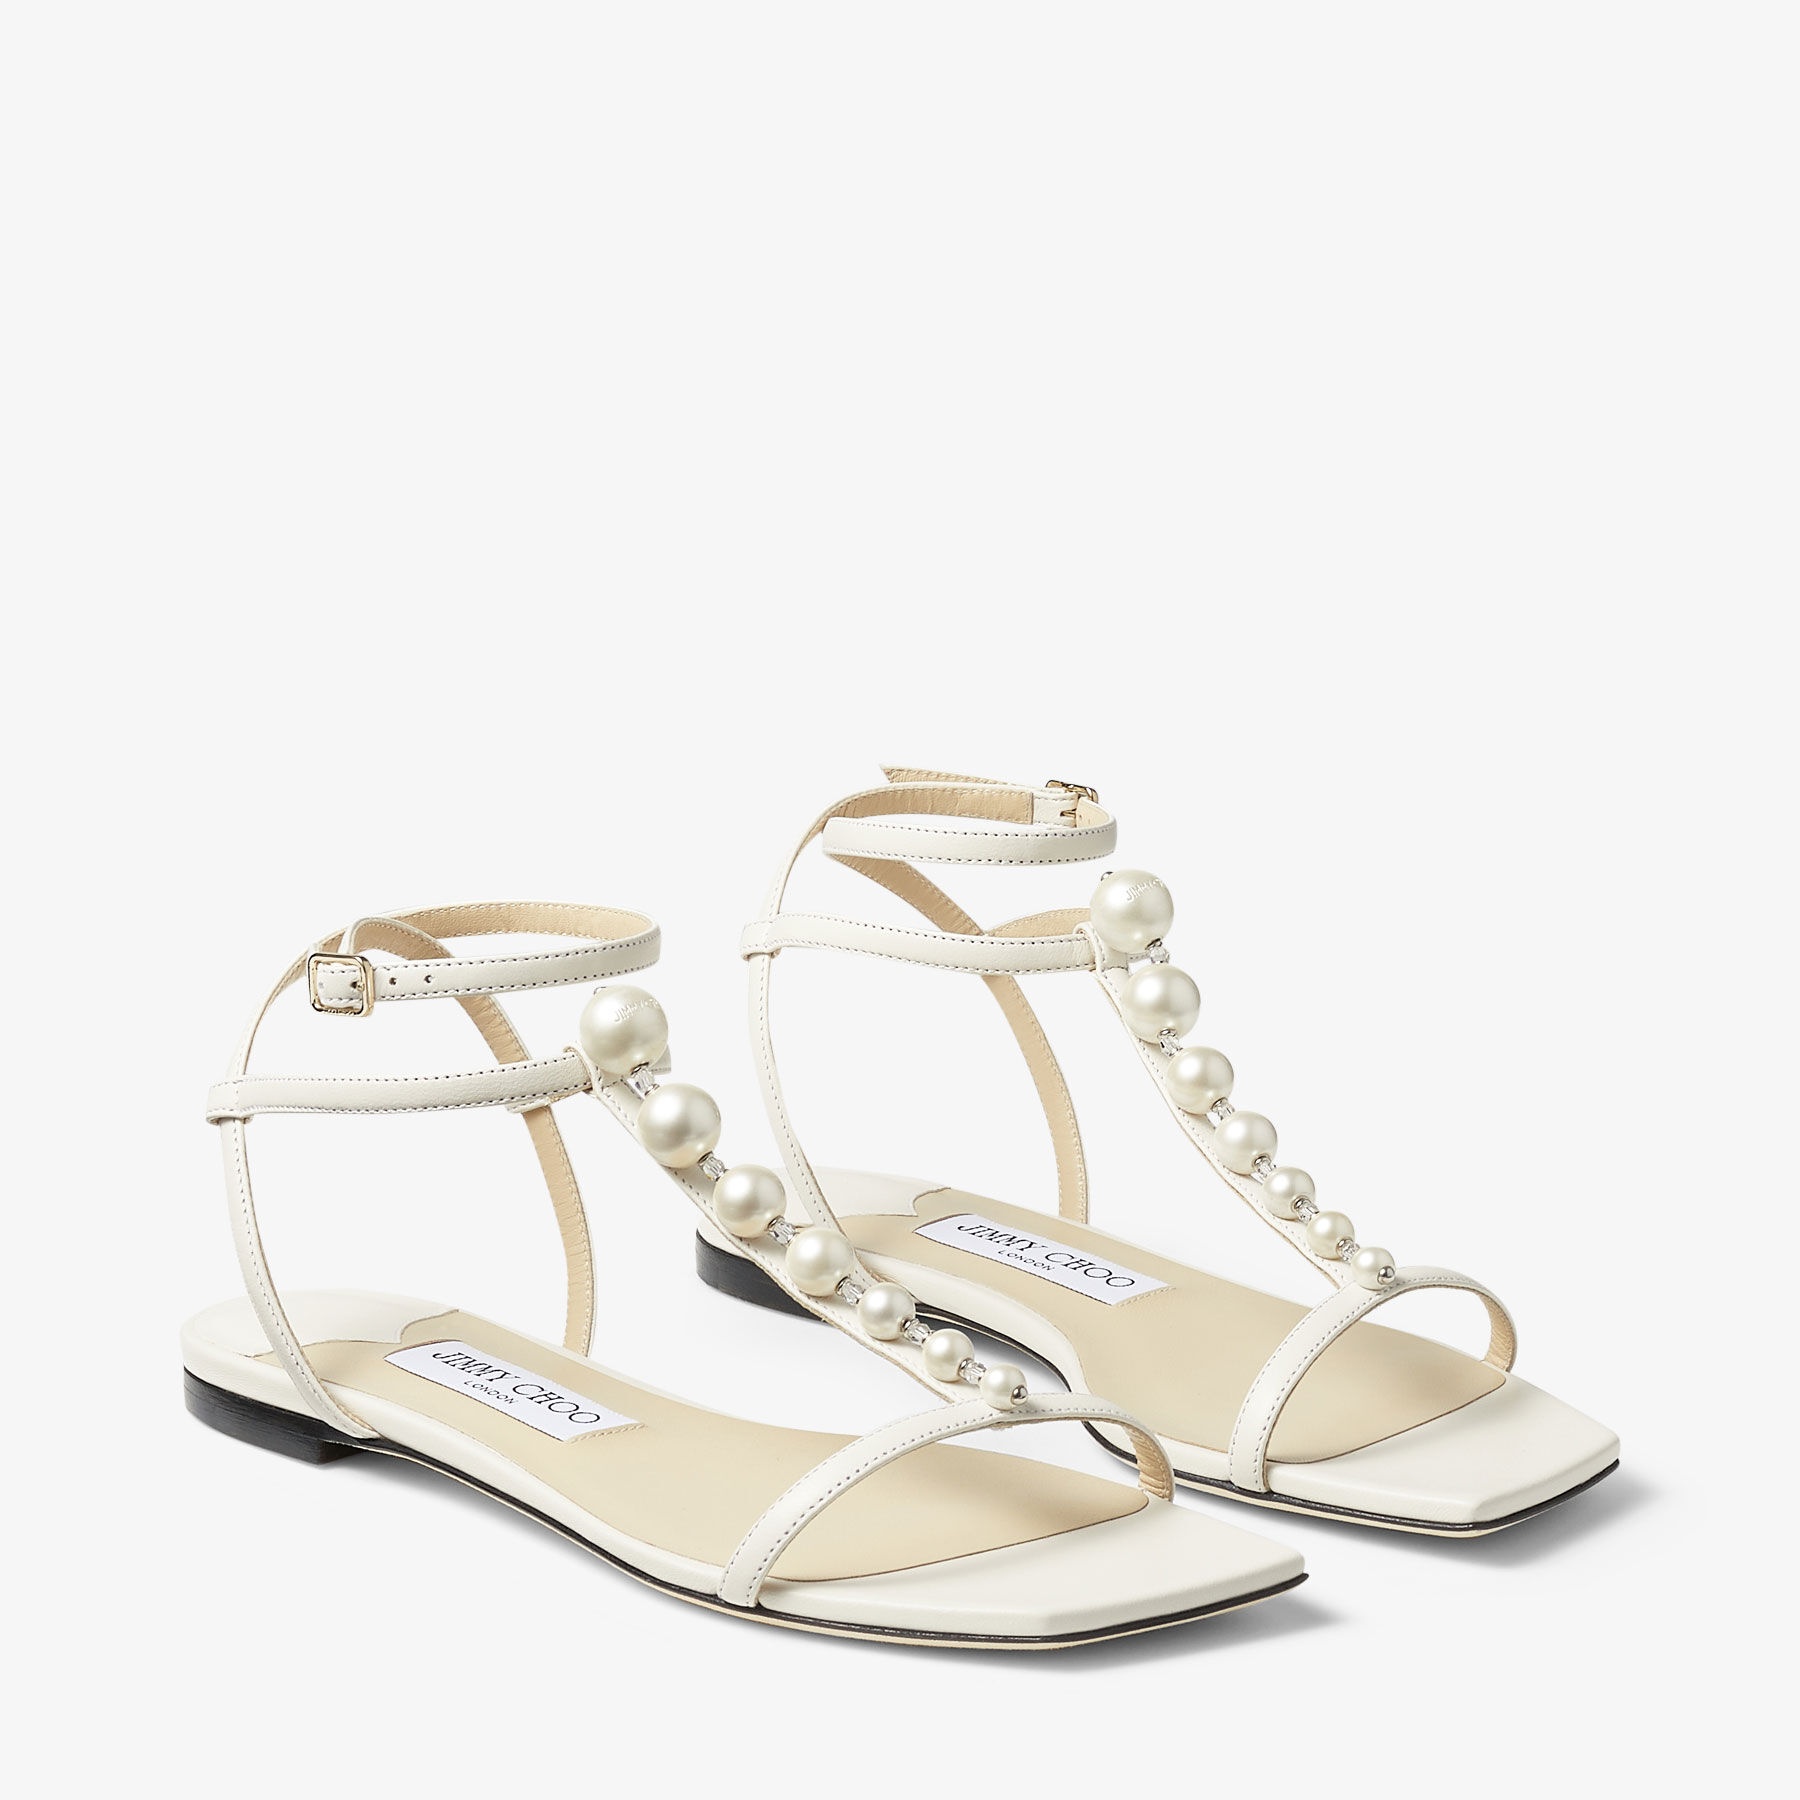 Amari Flat
Latte Nappa Leather Flat Sandals with Pearls - 3